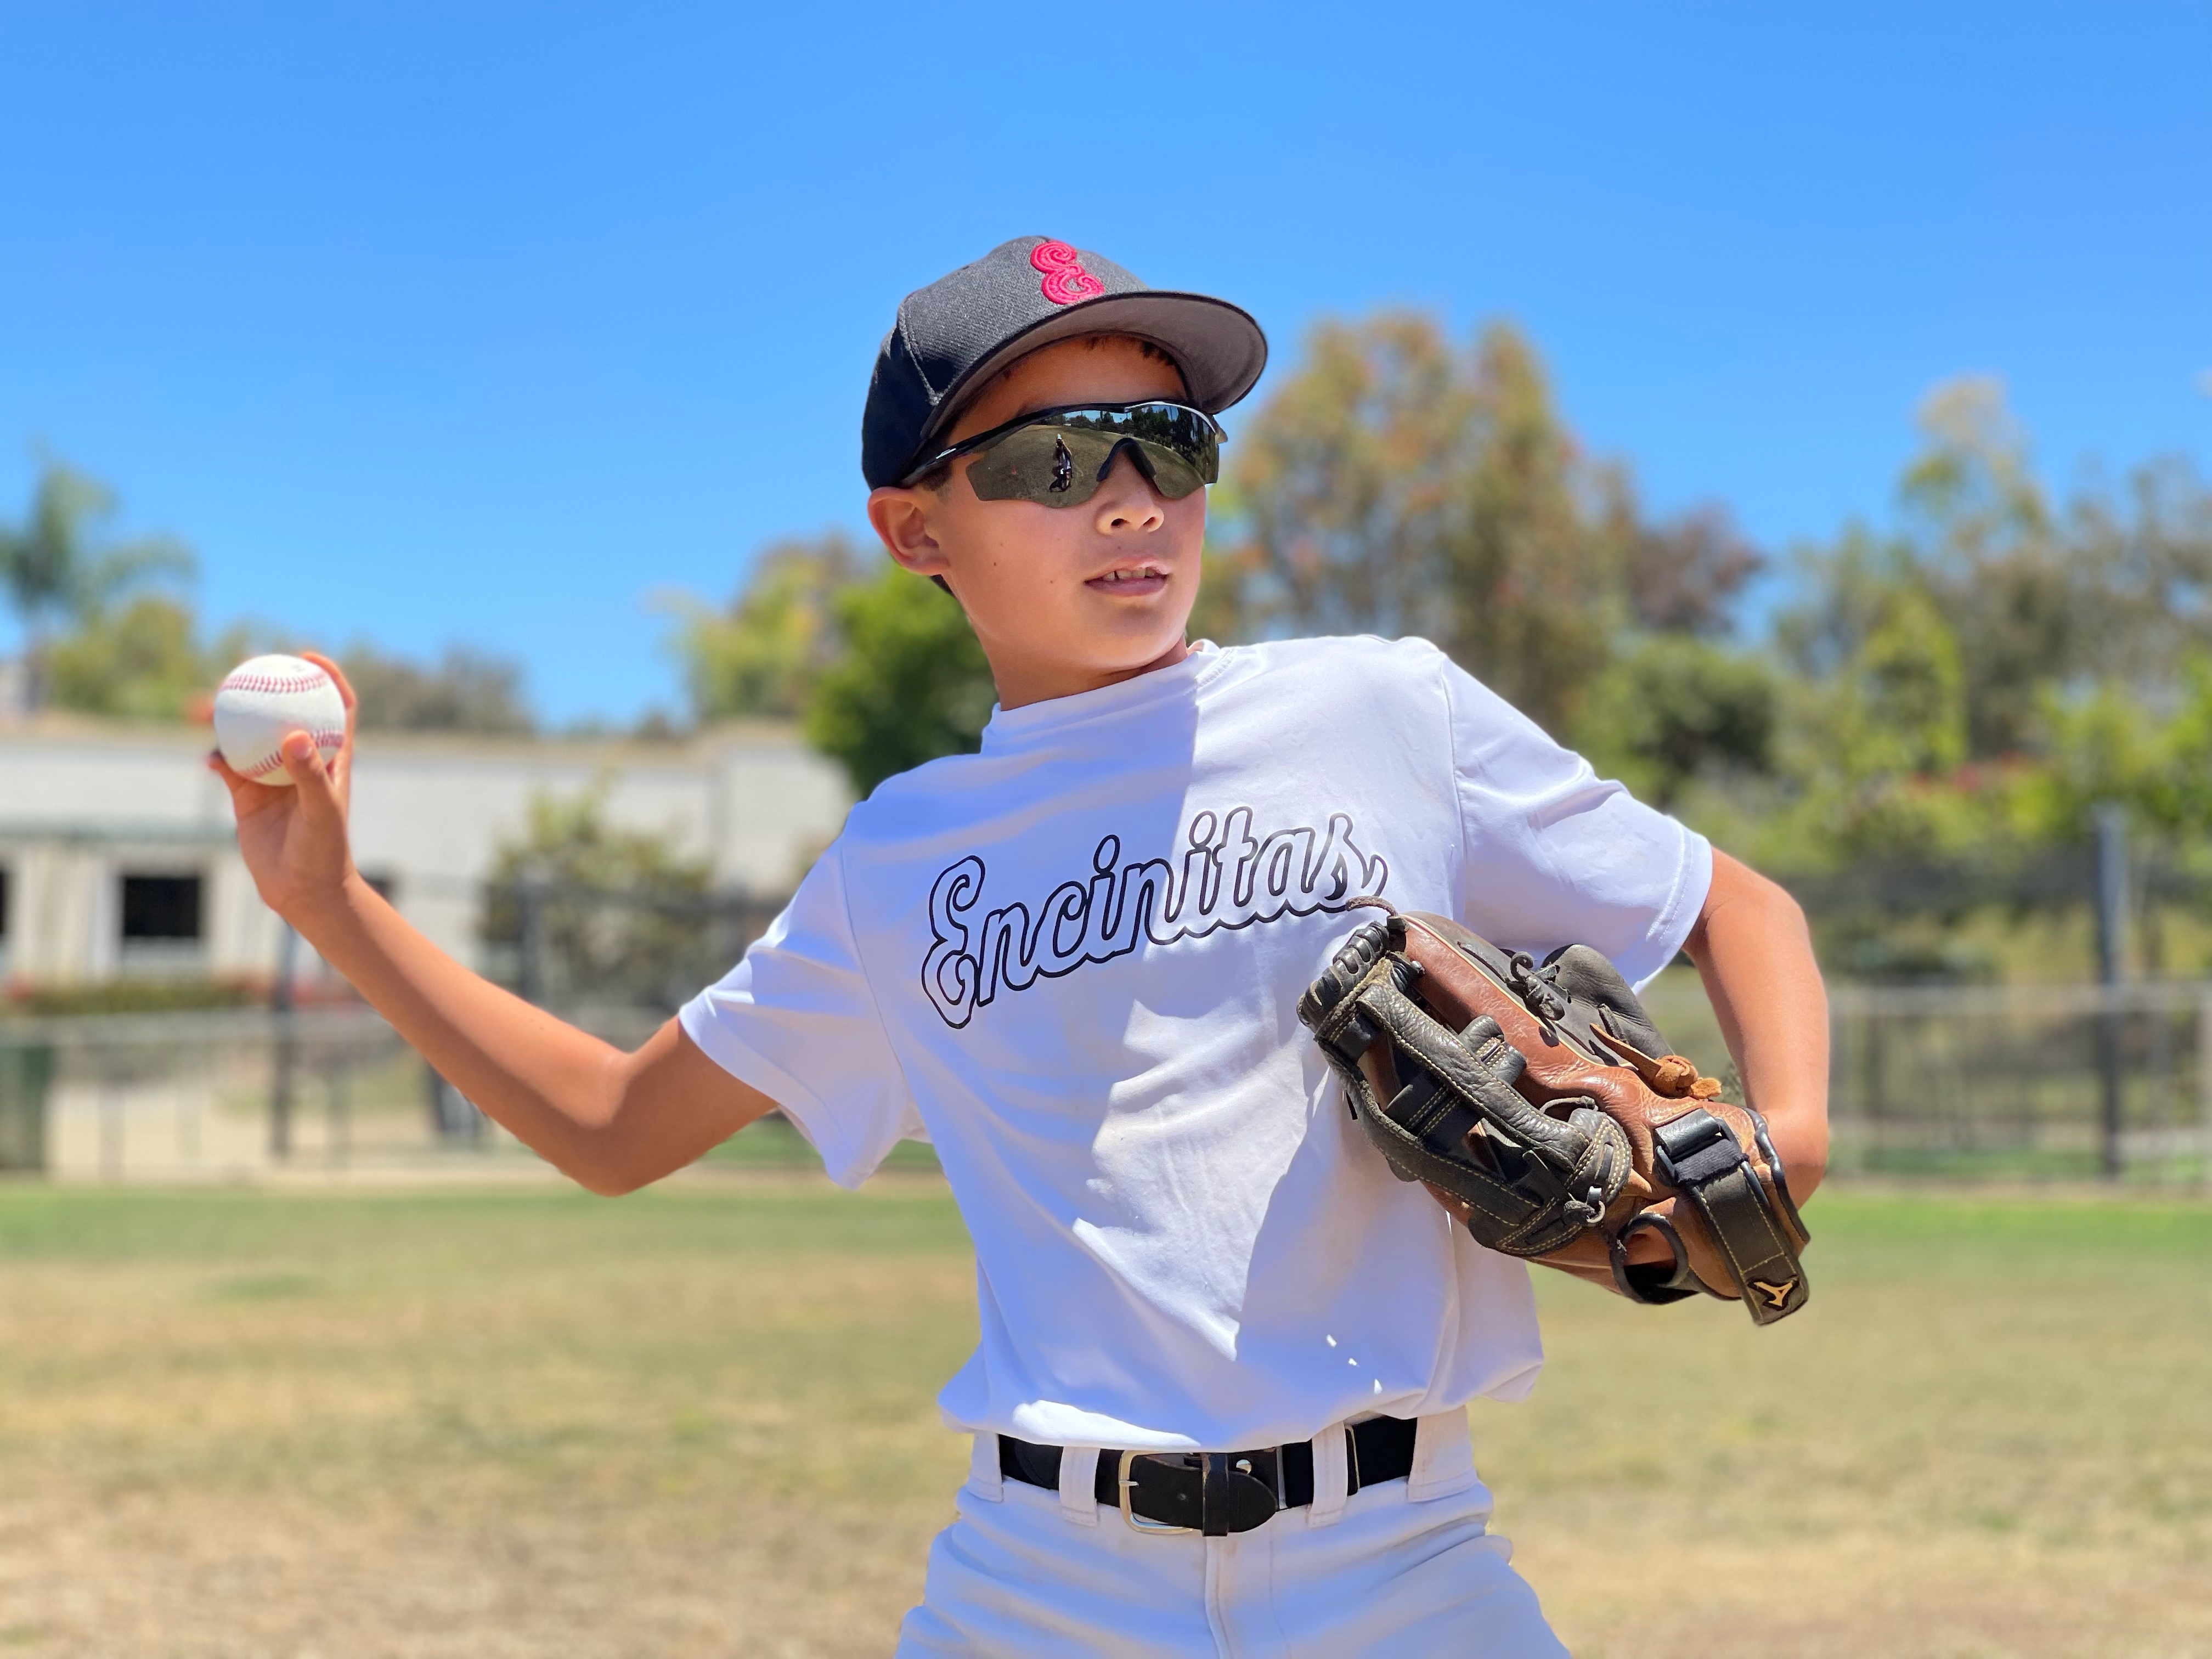 Jarrin introduces baseball to Ecuador's youth